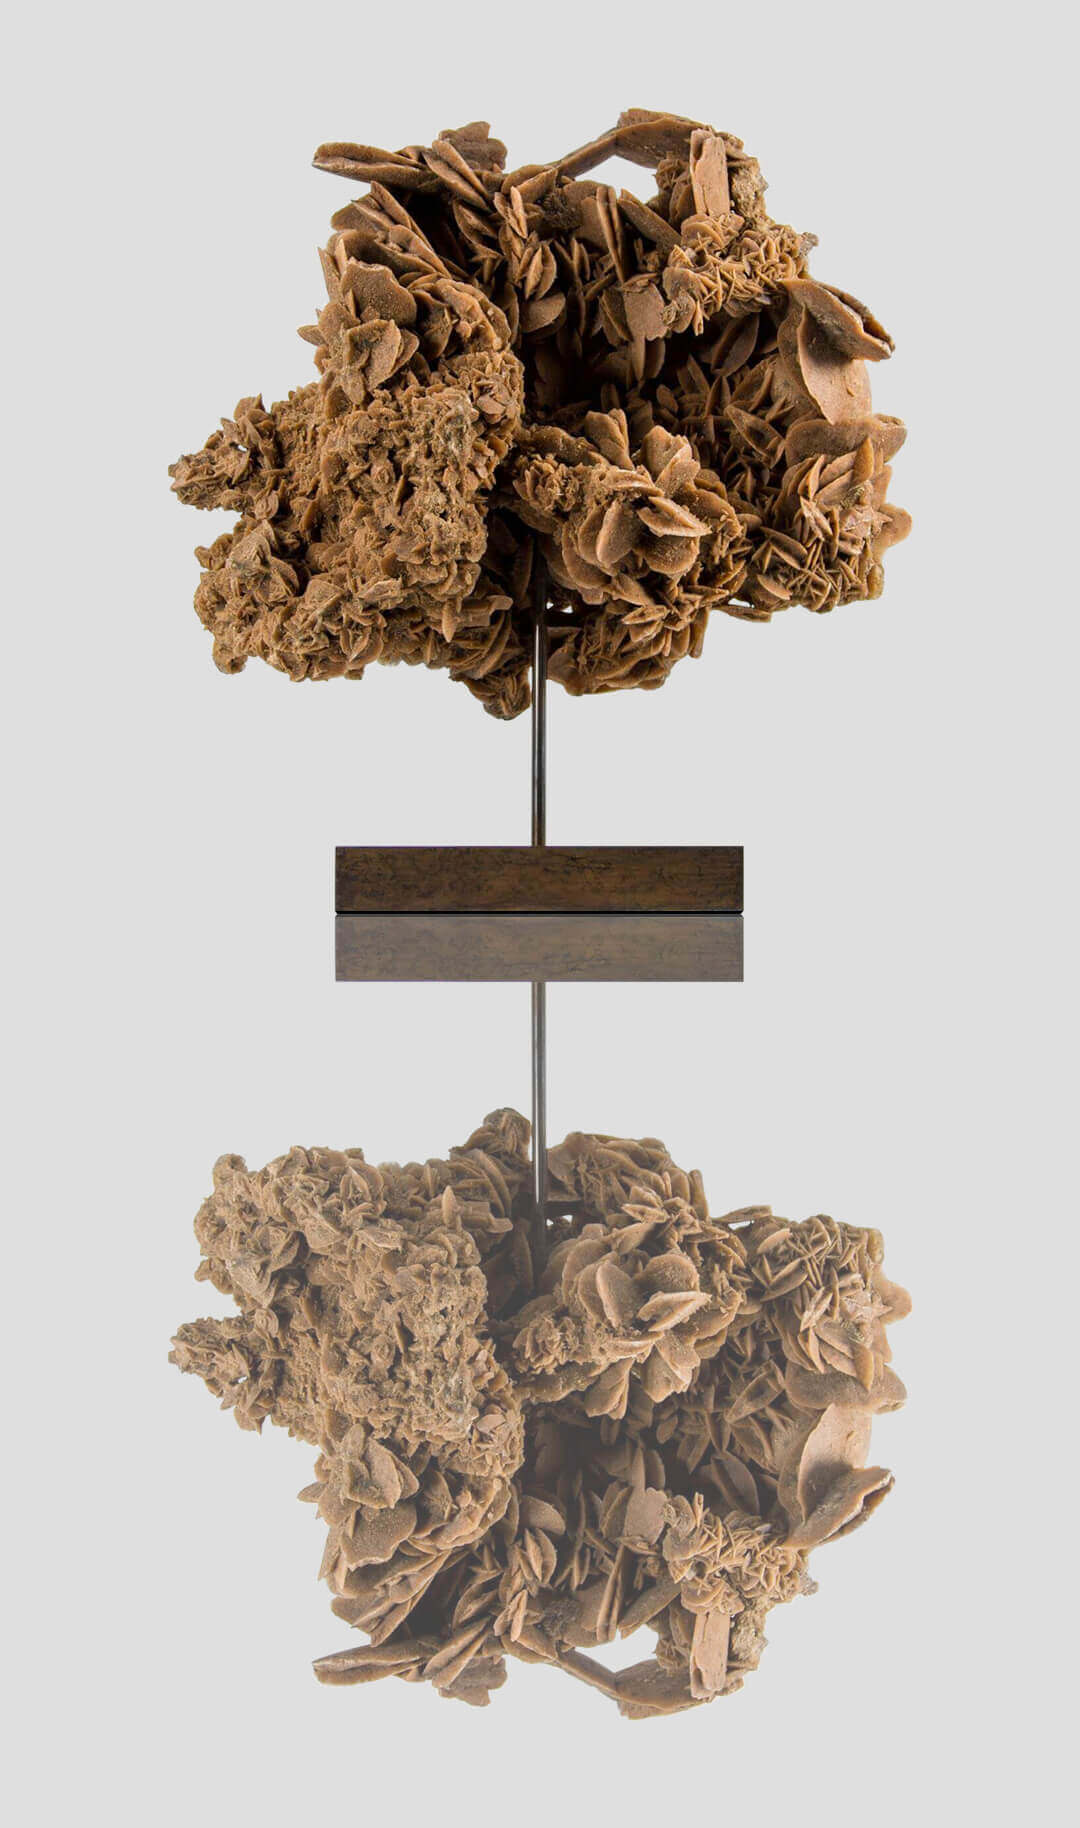 A medium sized desert rose on a cradled bronze stand in an art gallery